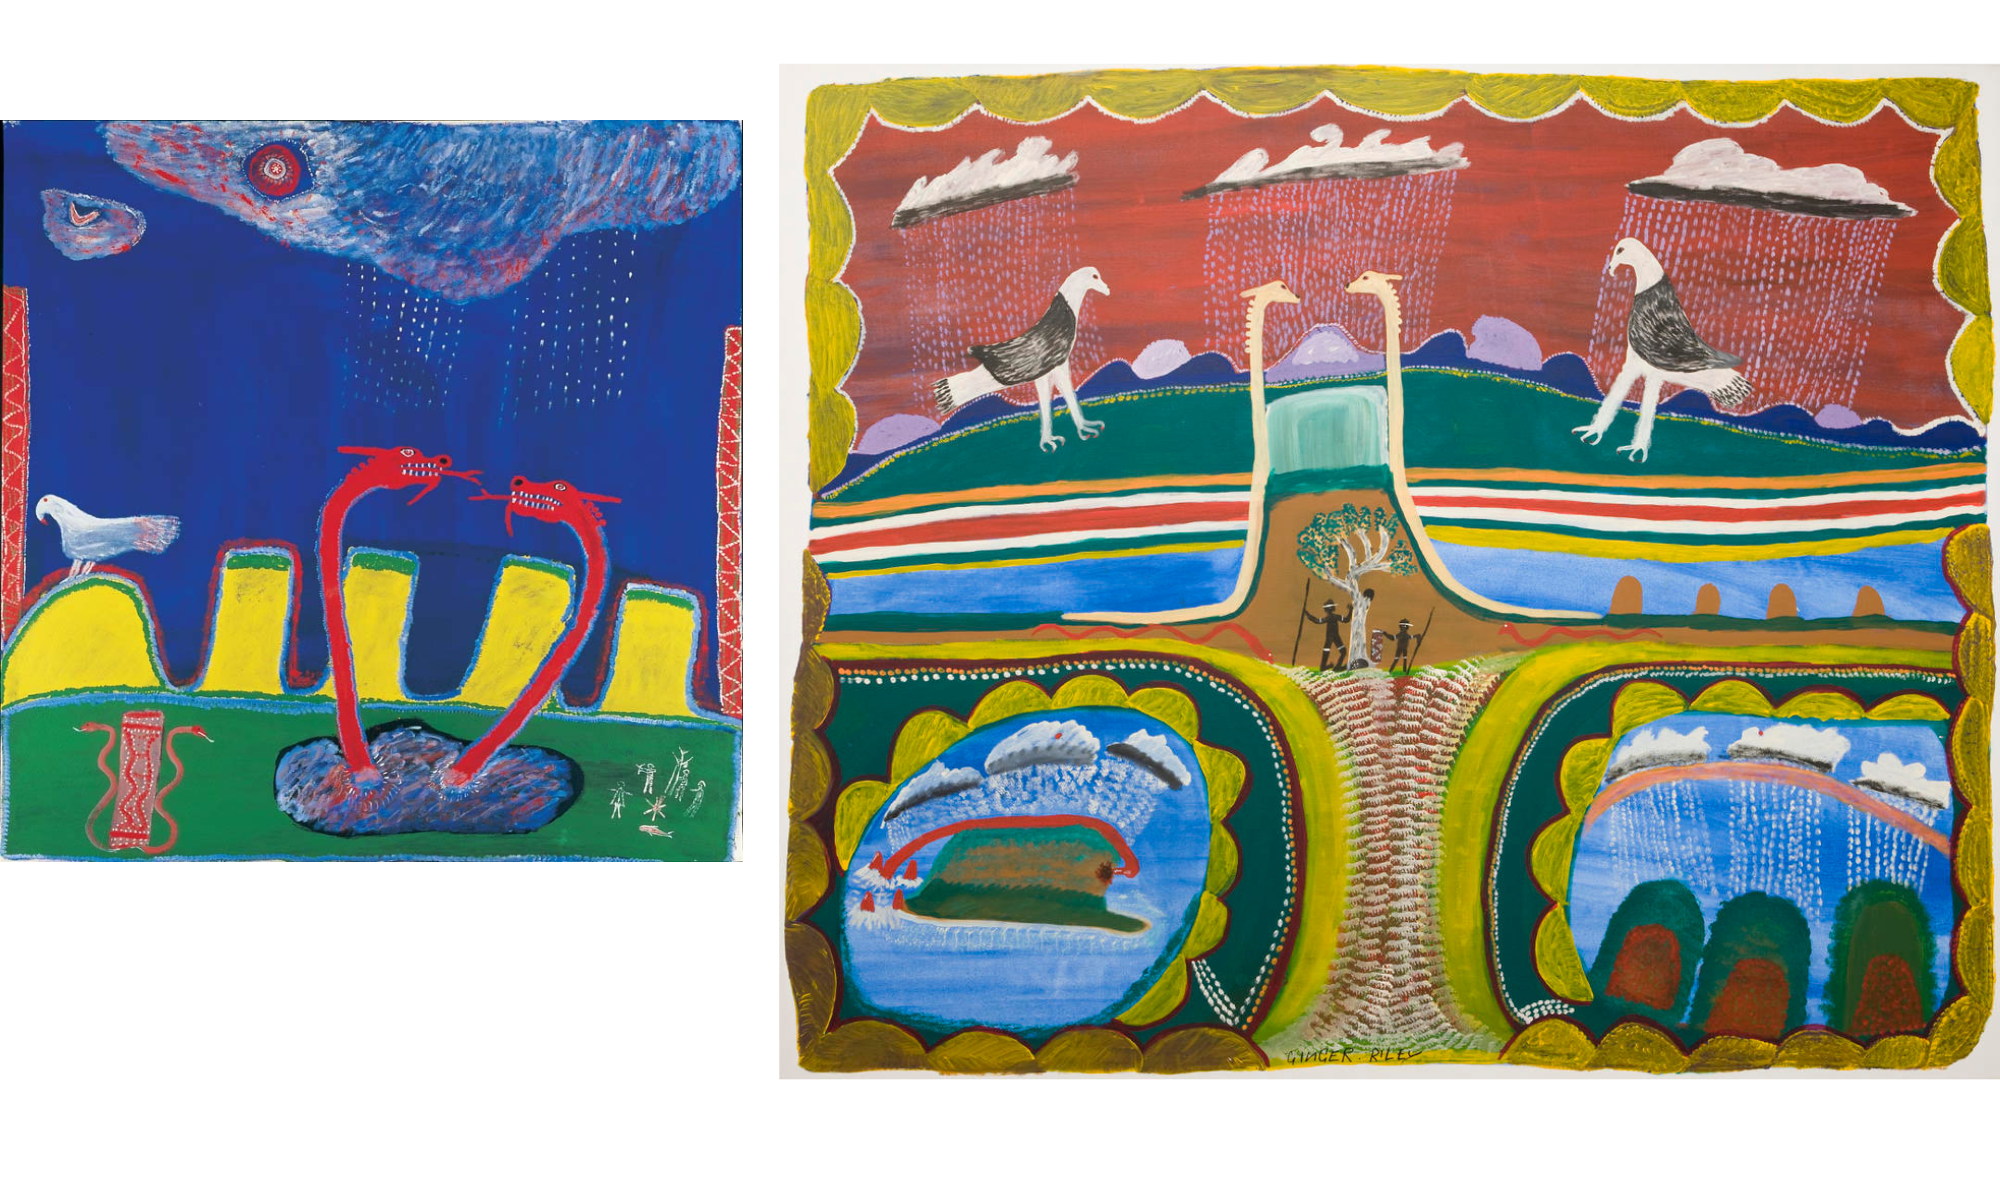 Two Aboriginal Artwork by Ginger Riley Munduwalawala